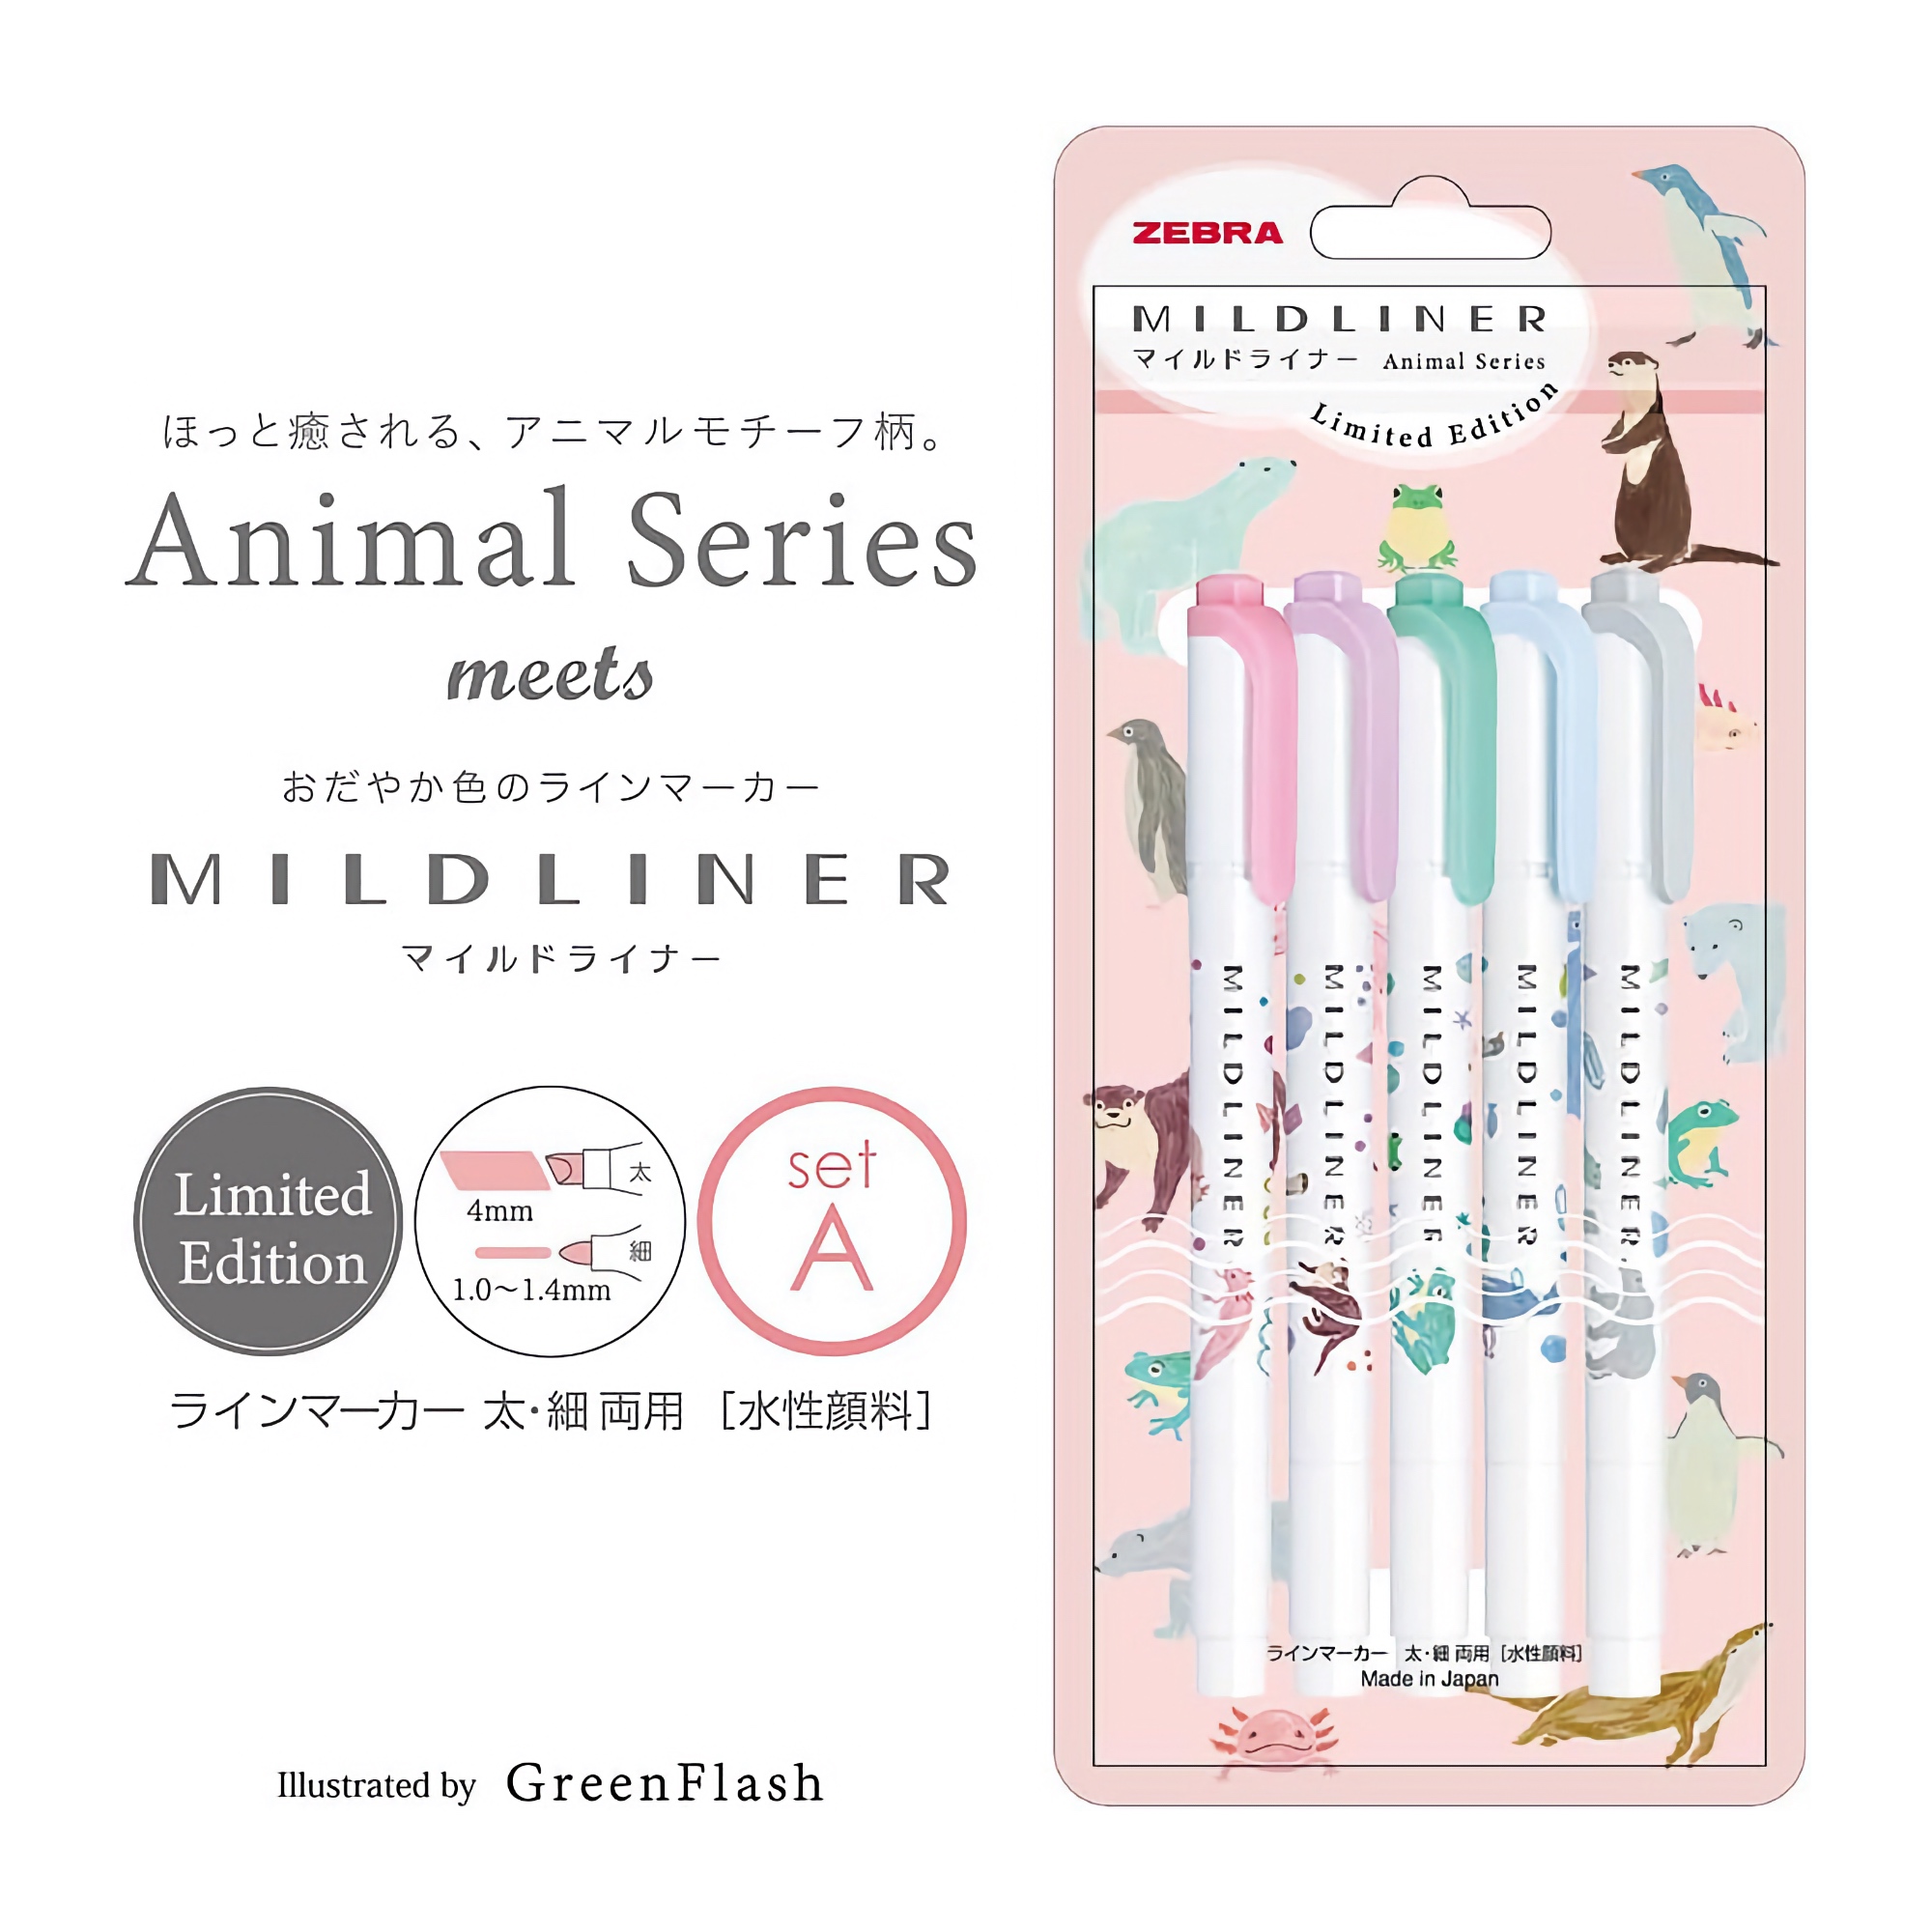 Zebra Mildliner Bold / Fine Animal Series Limited Edition Aquarium (Set A) - 5-pack